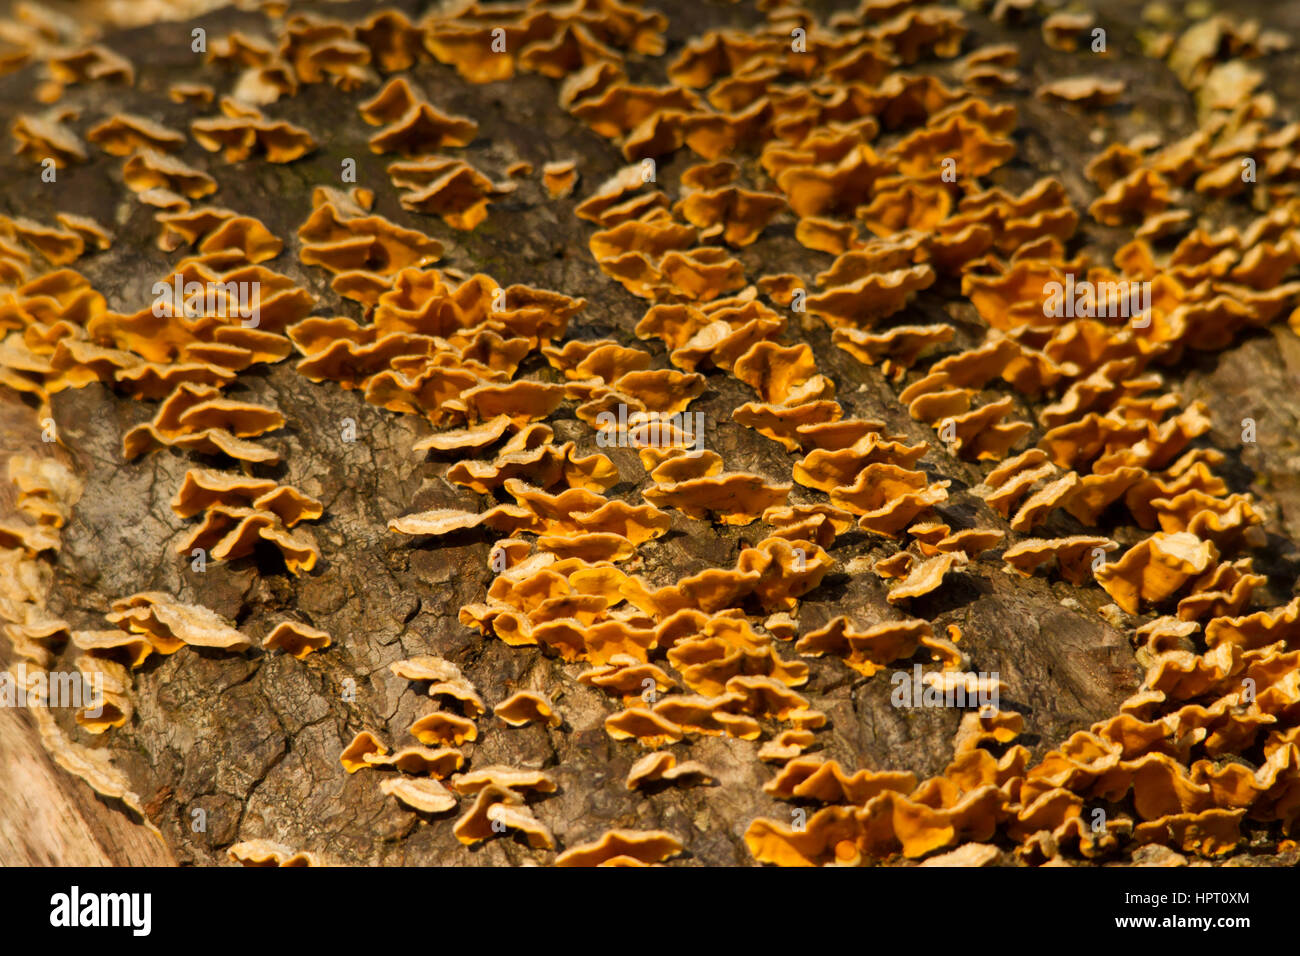 Fungus growing on a log Stock Photo